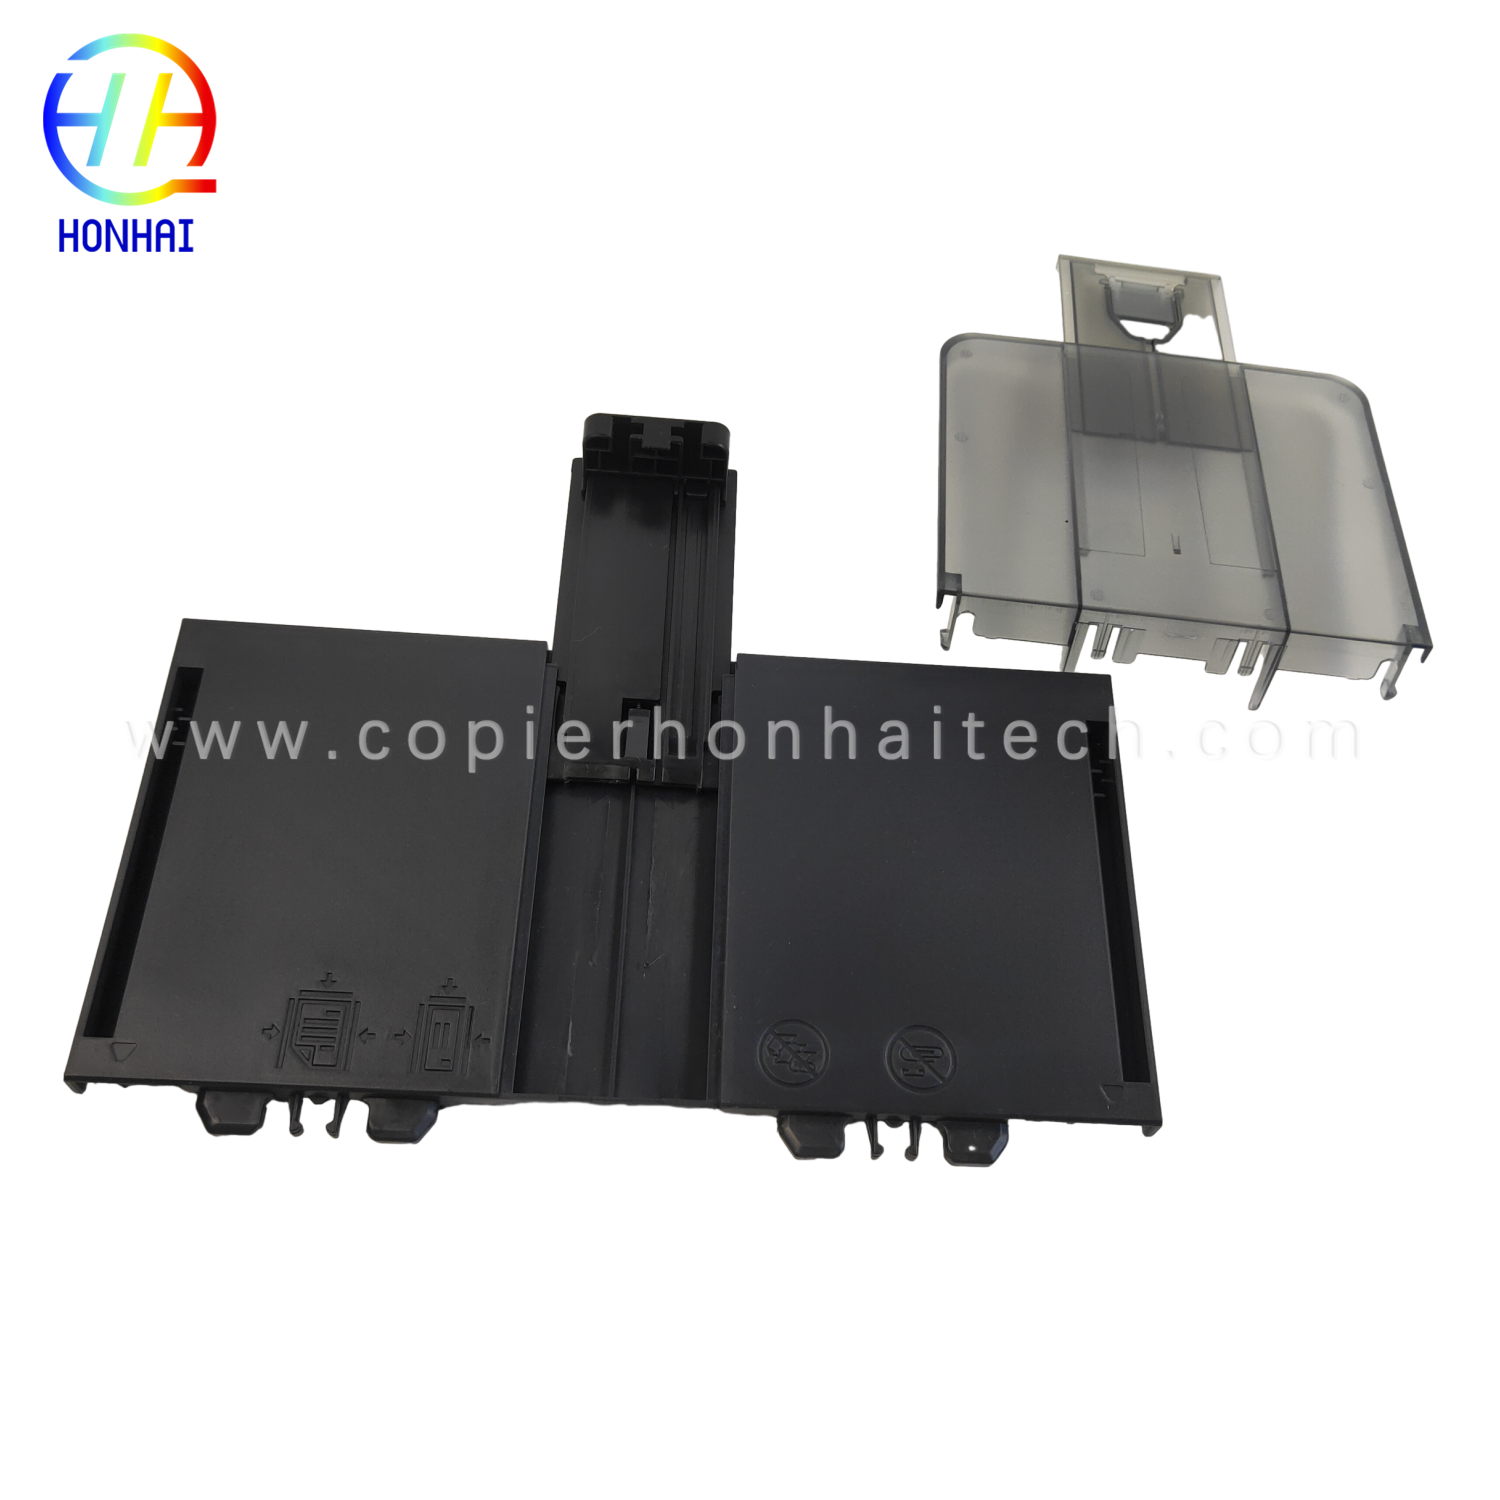 https://www.copierhonhaitech.com/receiving-tray-and-paper-tray-set-for-hp-laserjet-pro-mfp-225dn-product/